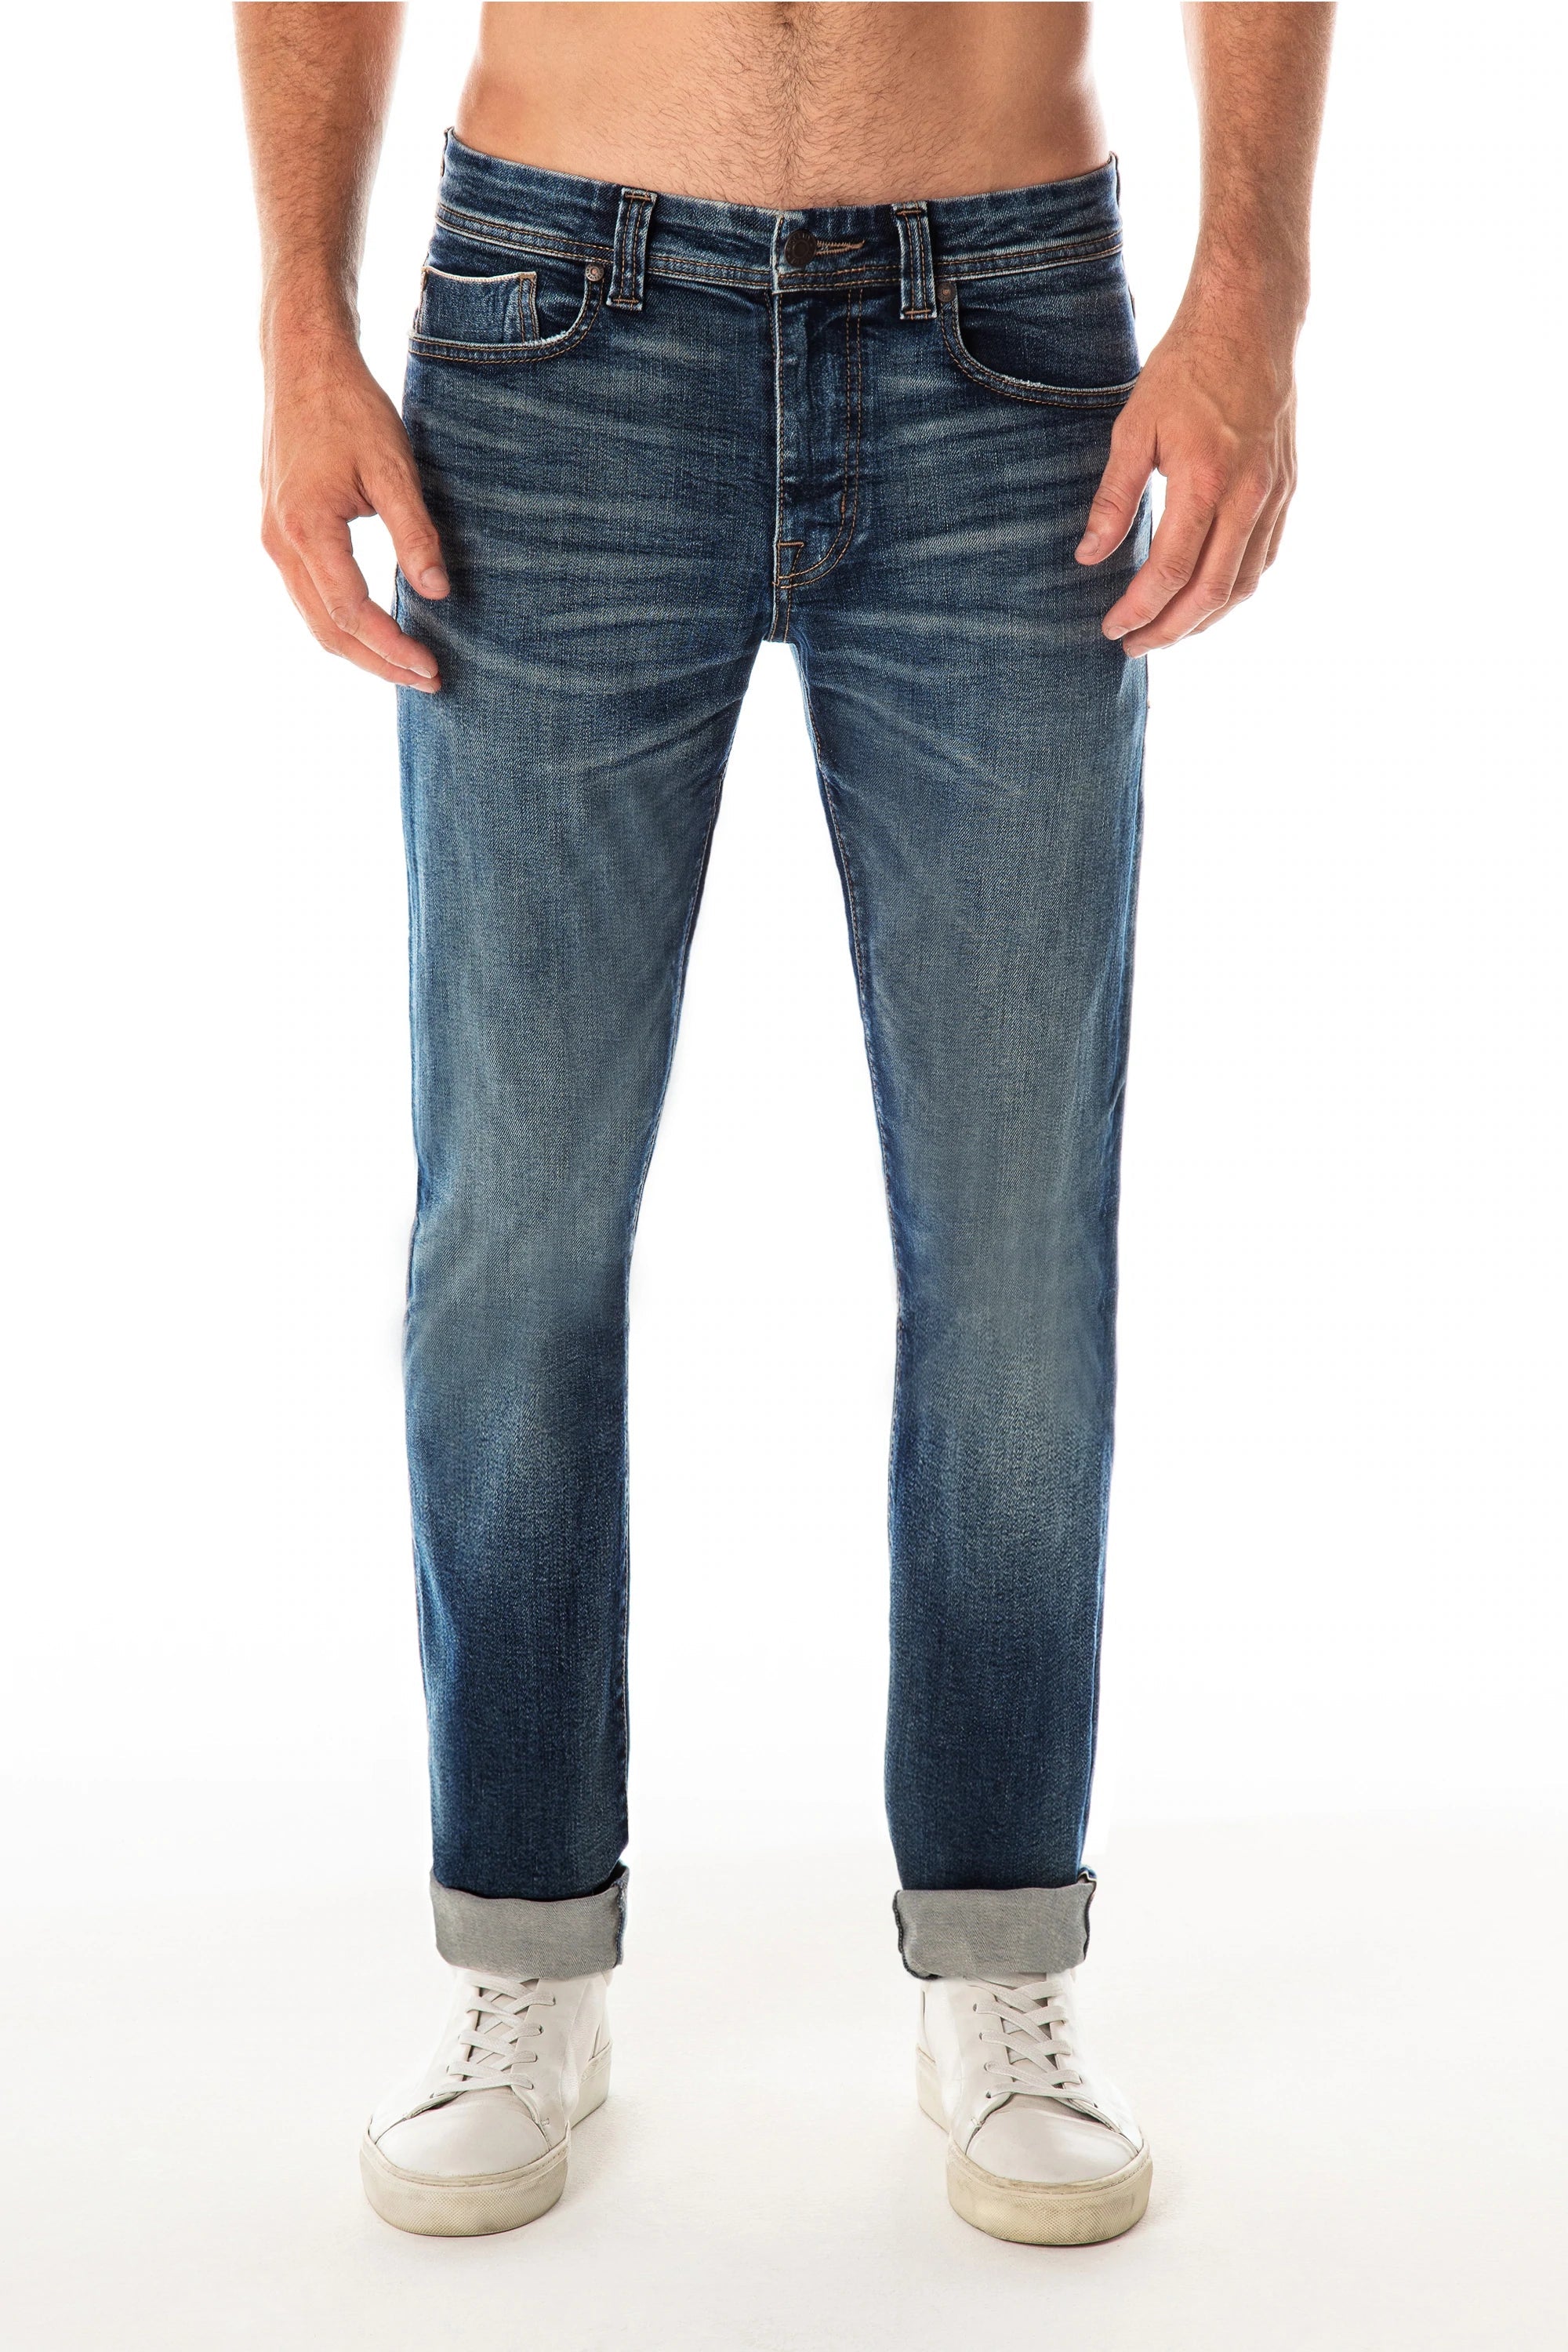 Fidelity Denim Torino Patchouli Selvedge Slim Fit Jeans-Men&#39;s Denim-36-Yaletown-Vancouver-Surrey-Canada